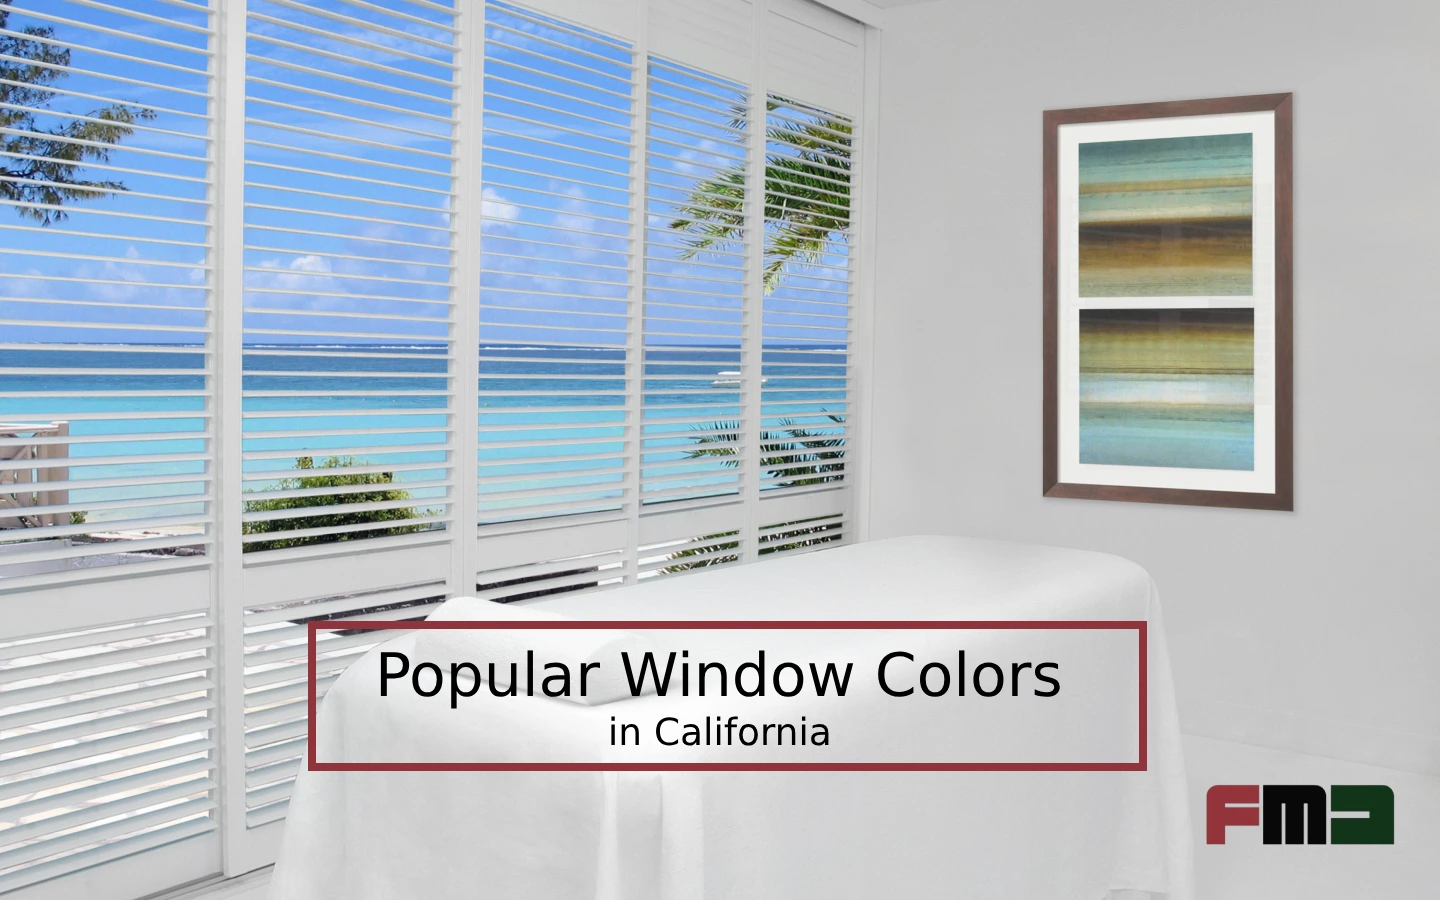 Popular Window Colors in California